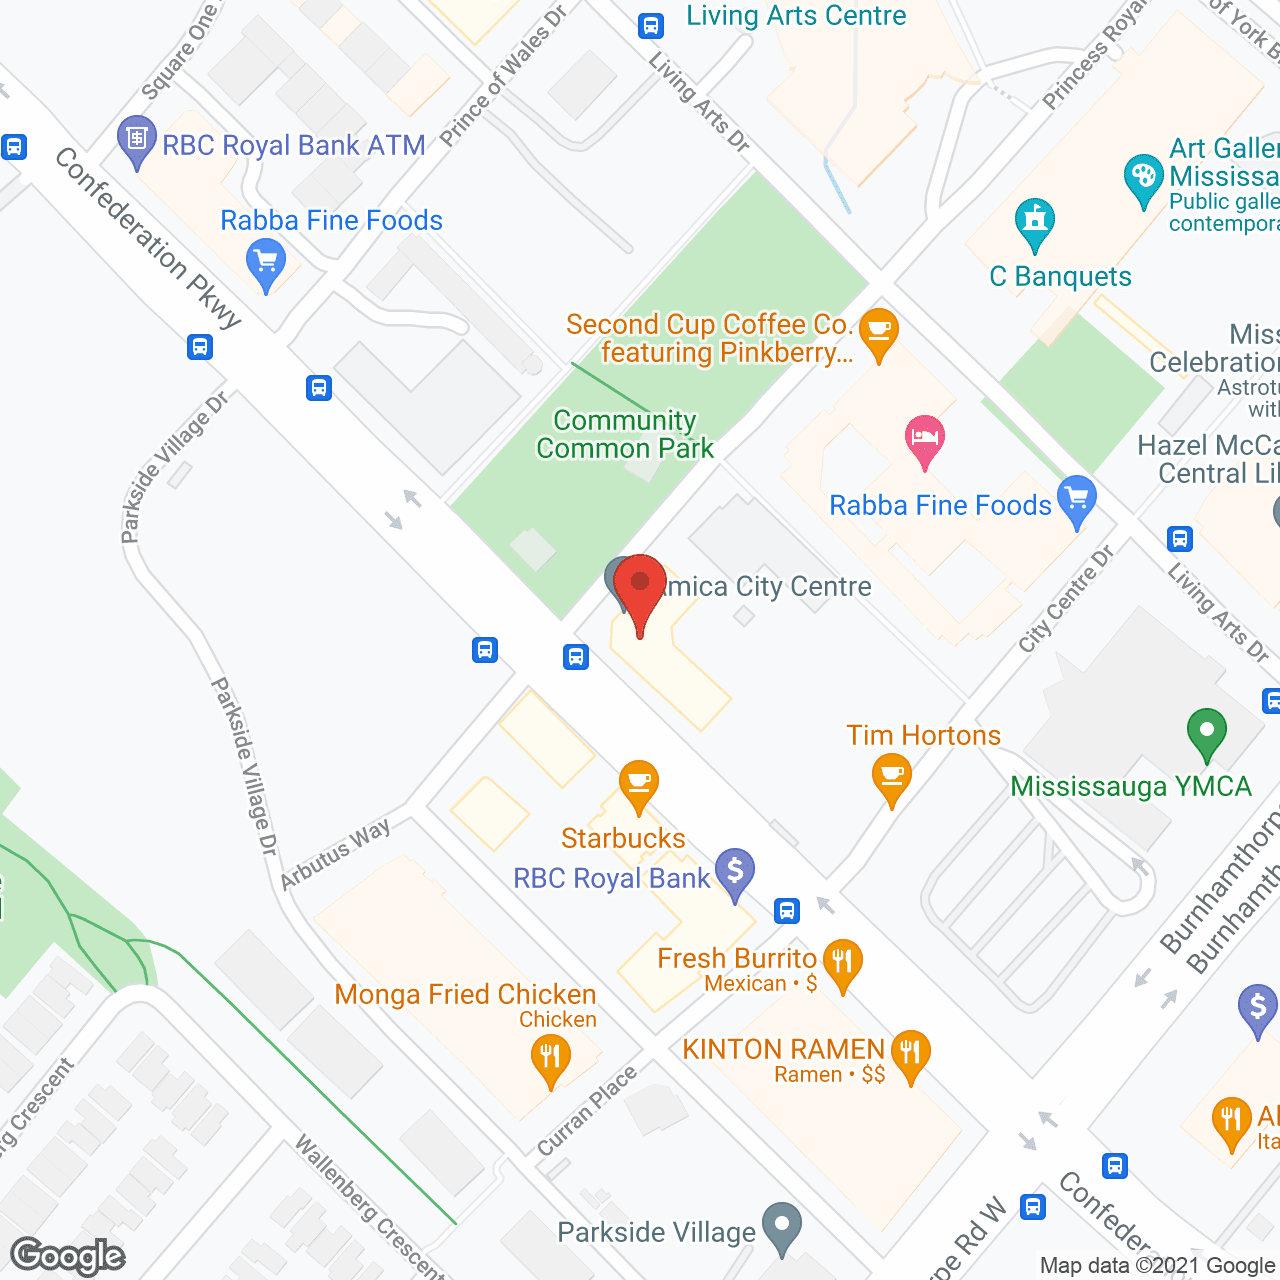 Amica City Centre in google map